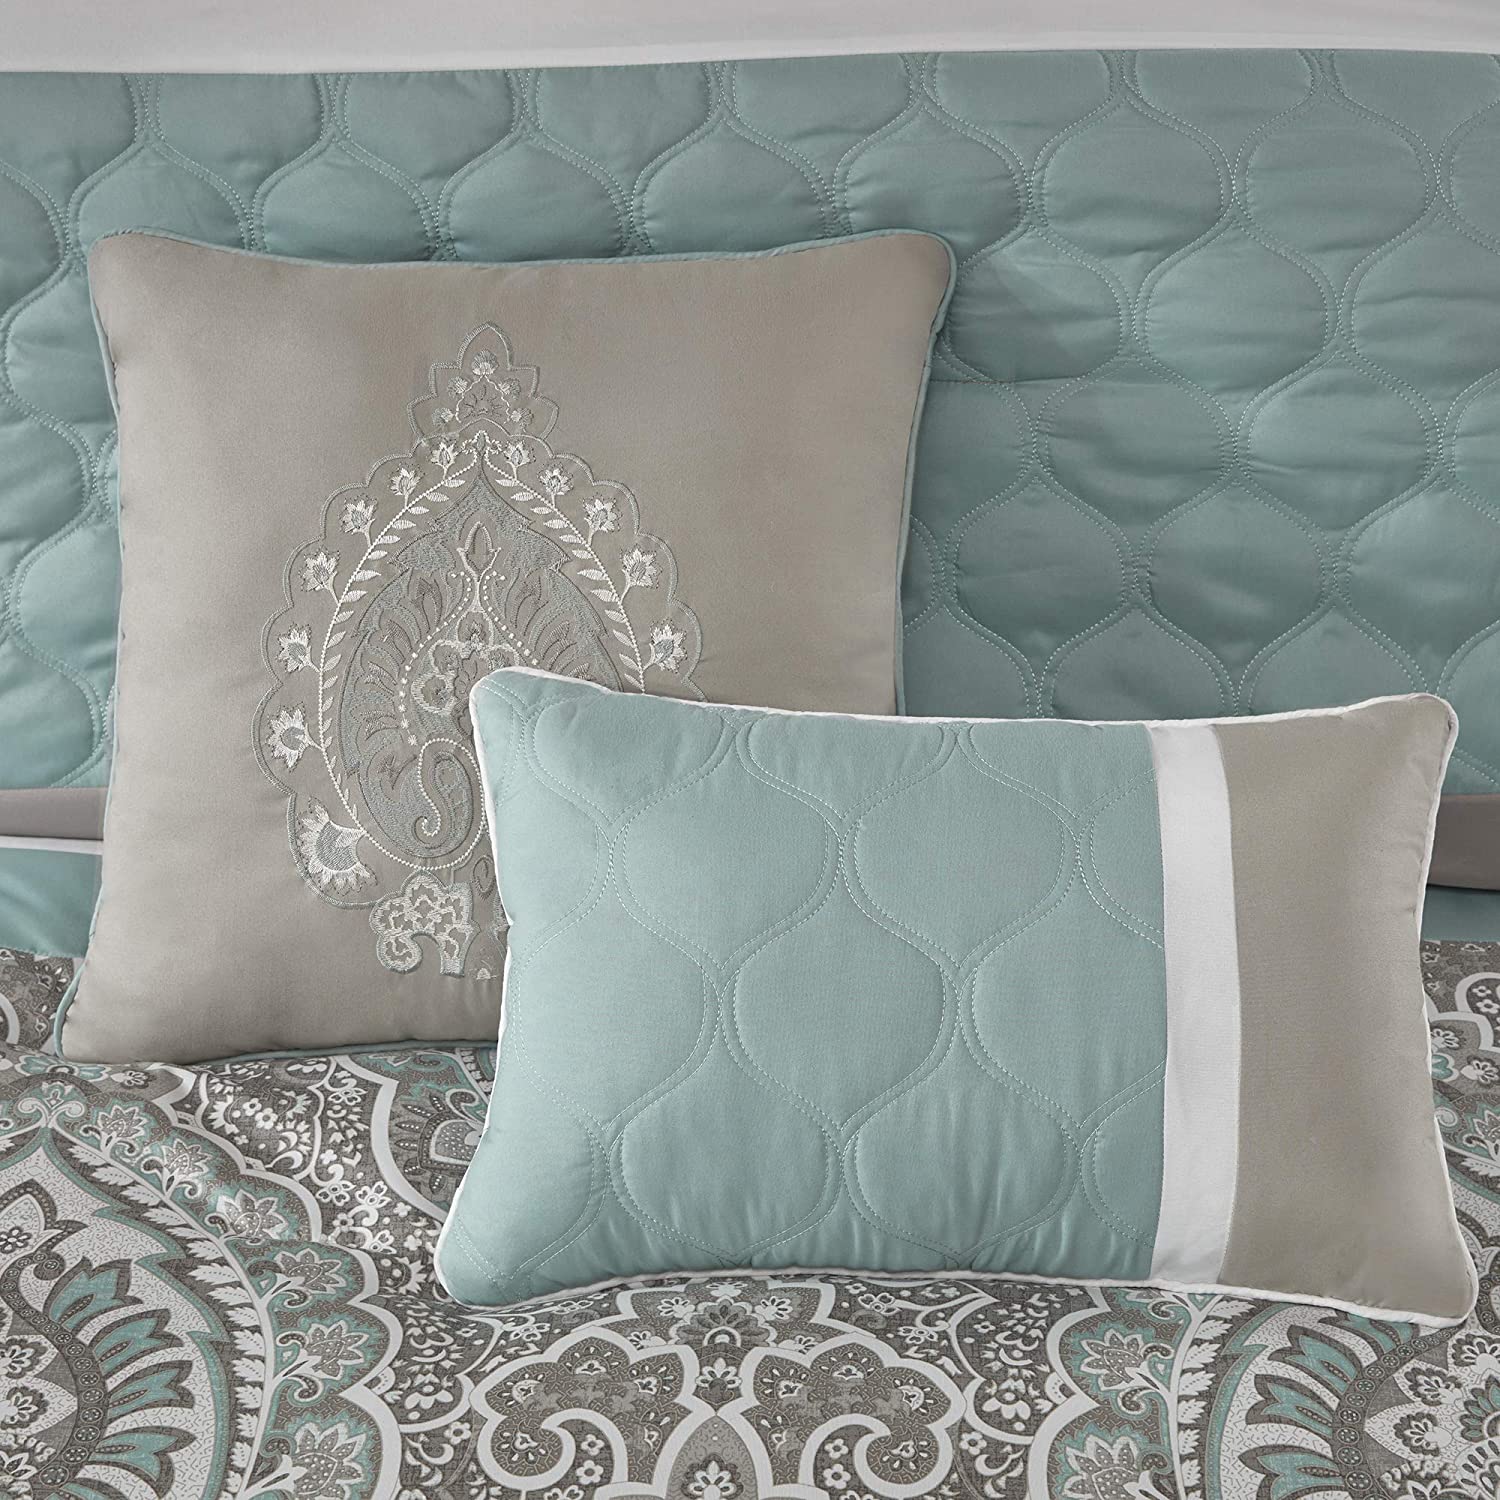 510 Design Shawnee Of 8 Pieces Bedding Comforter Set